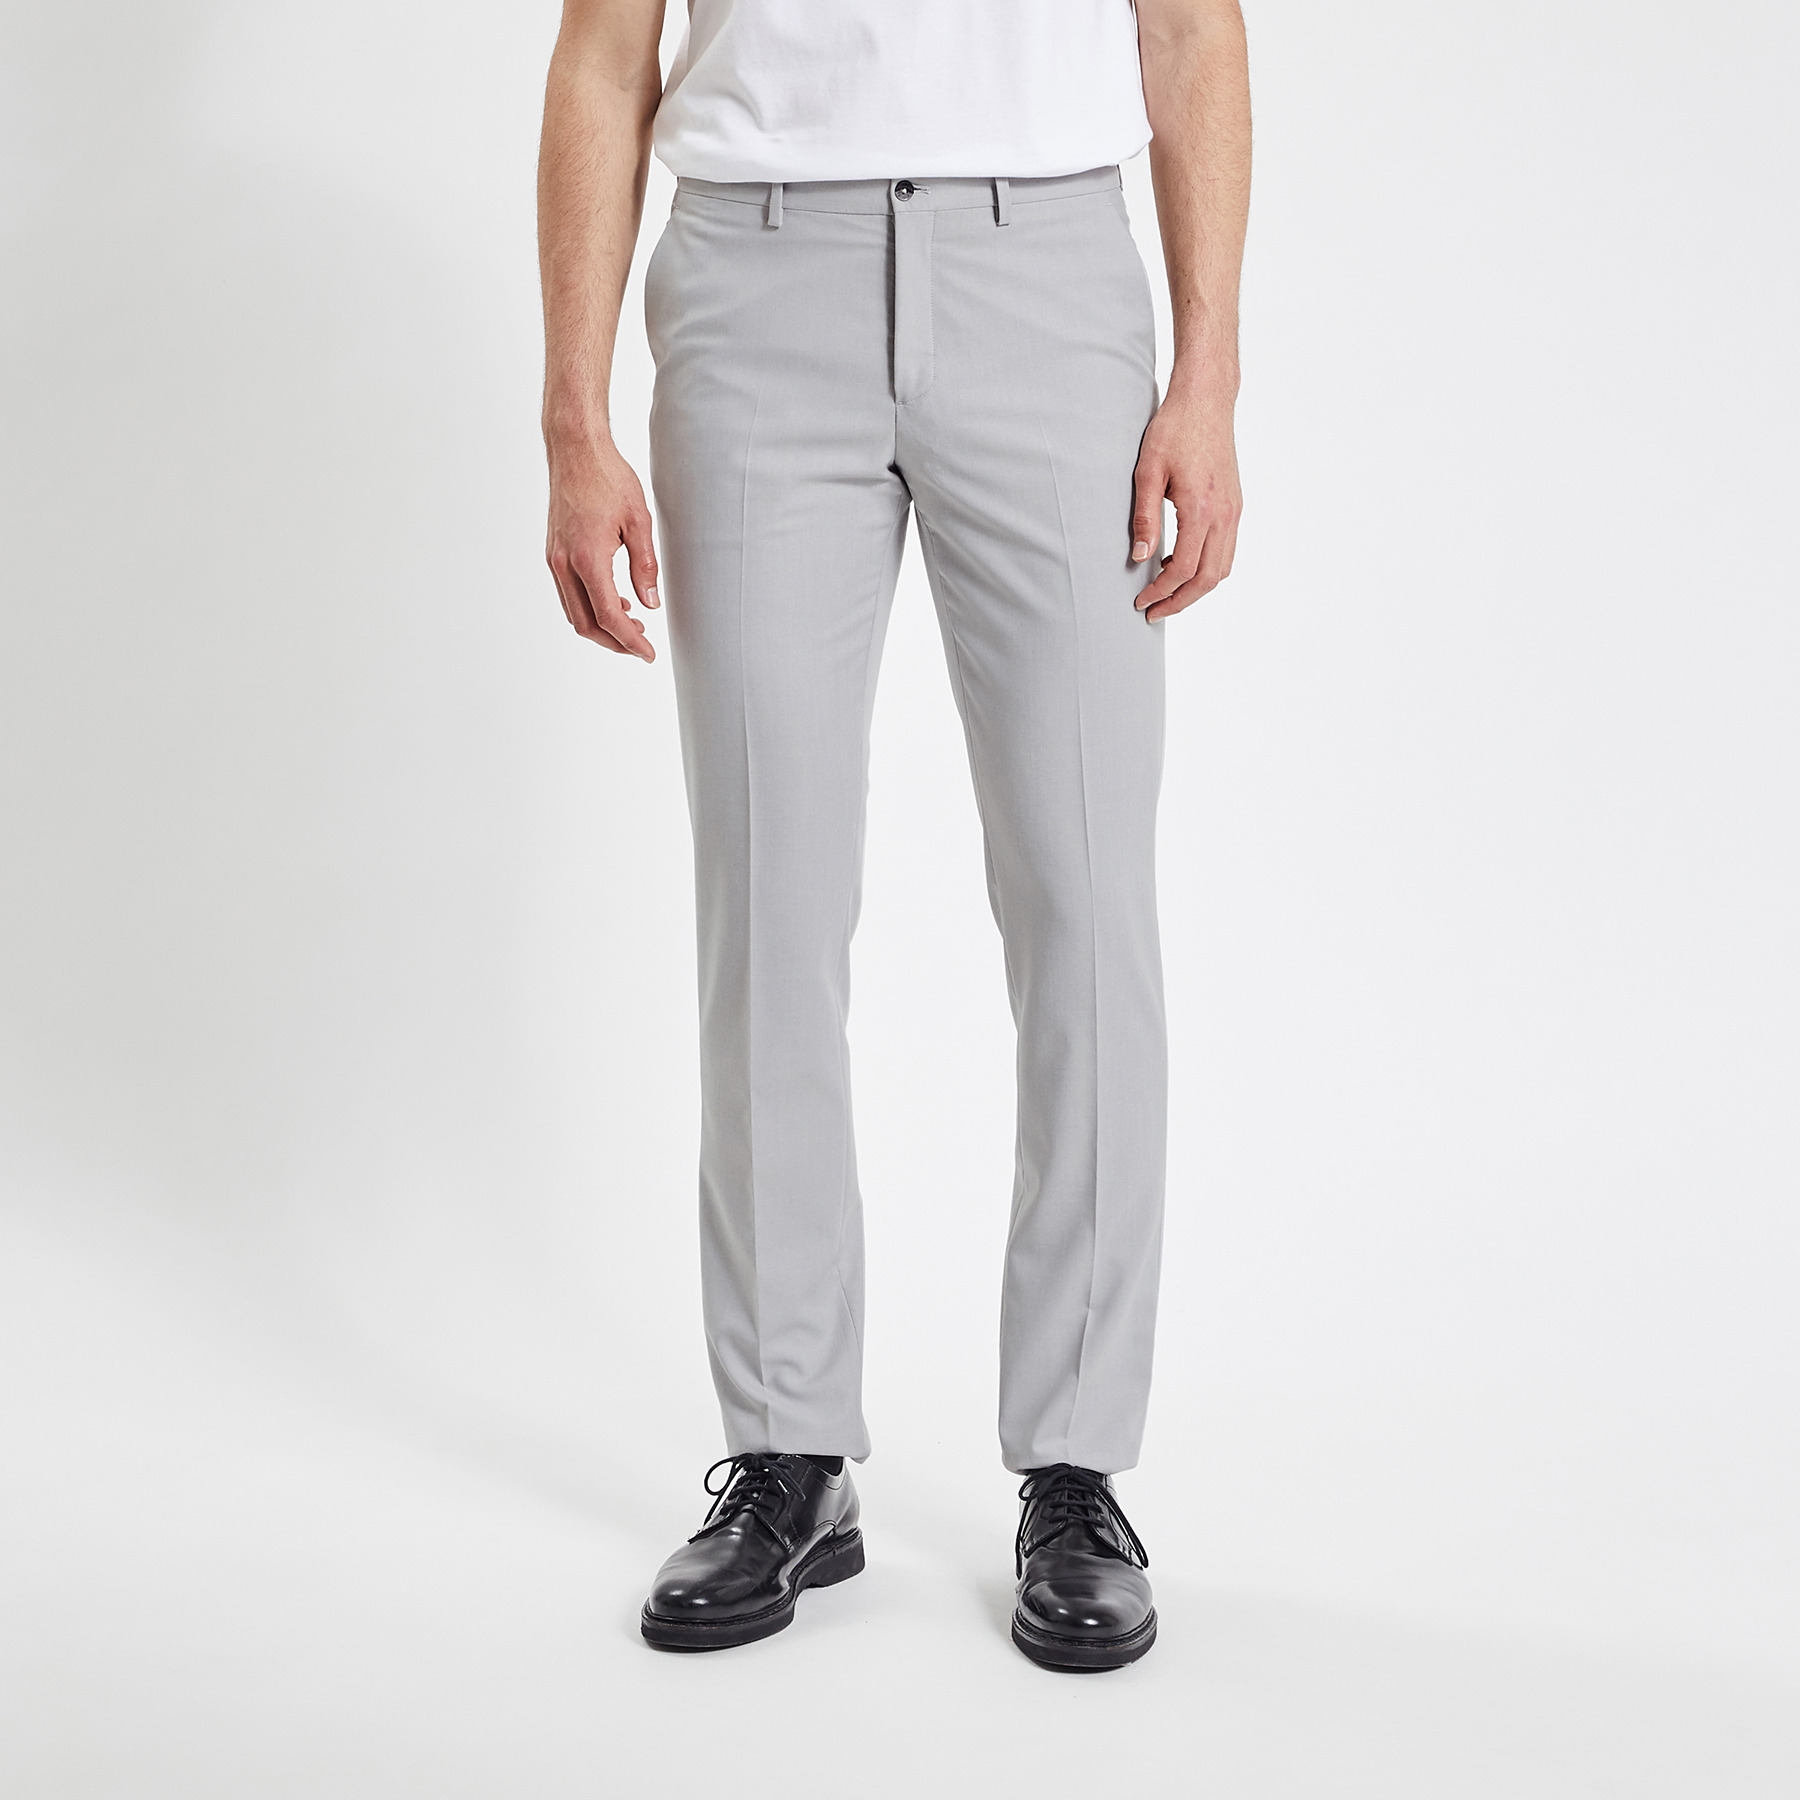 Pantalon de costume slim bi-ton Gris 36 71% Polyester, 27% Viscose, 2% Elasthanne Homme